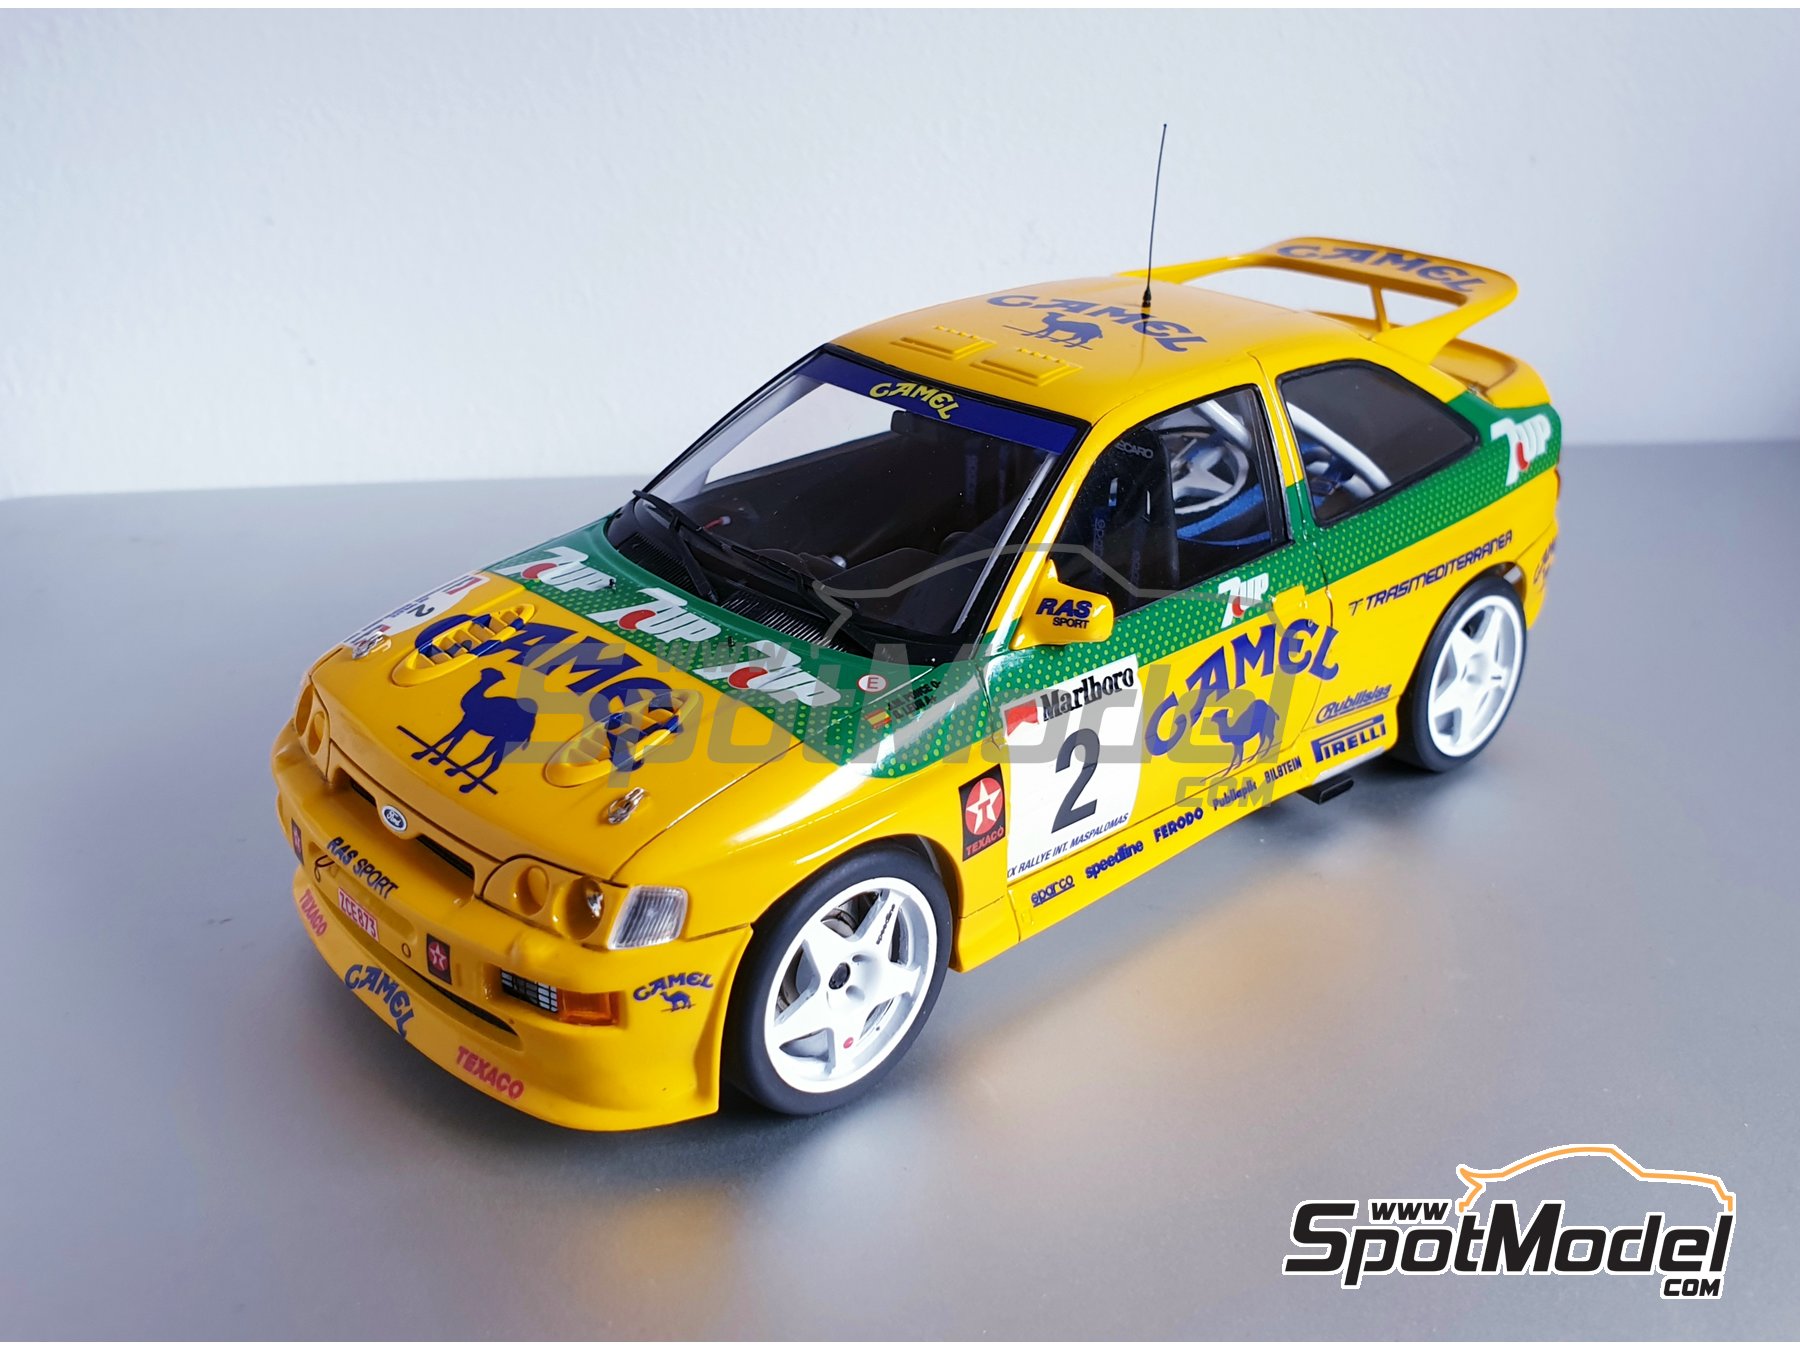 Calcas Ford Escort Maxi Kit Car Rally Manx 1997 1:32 1:43 1:24 1:18 Evans decals 